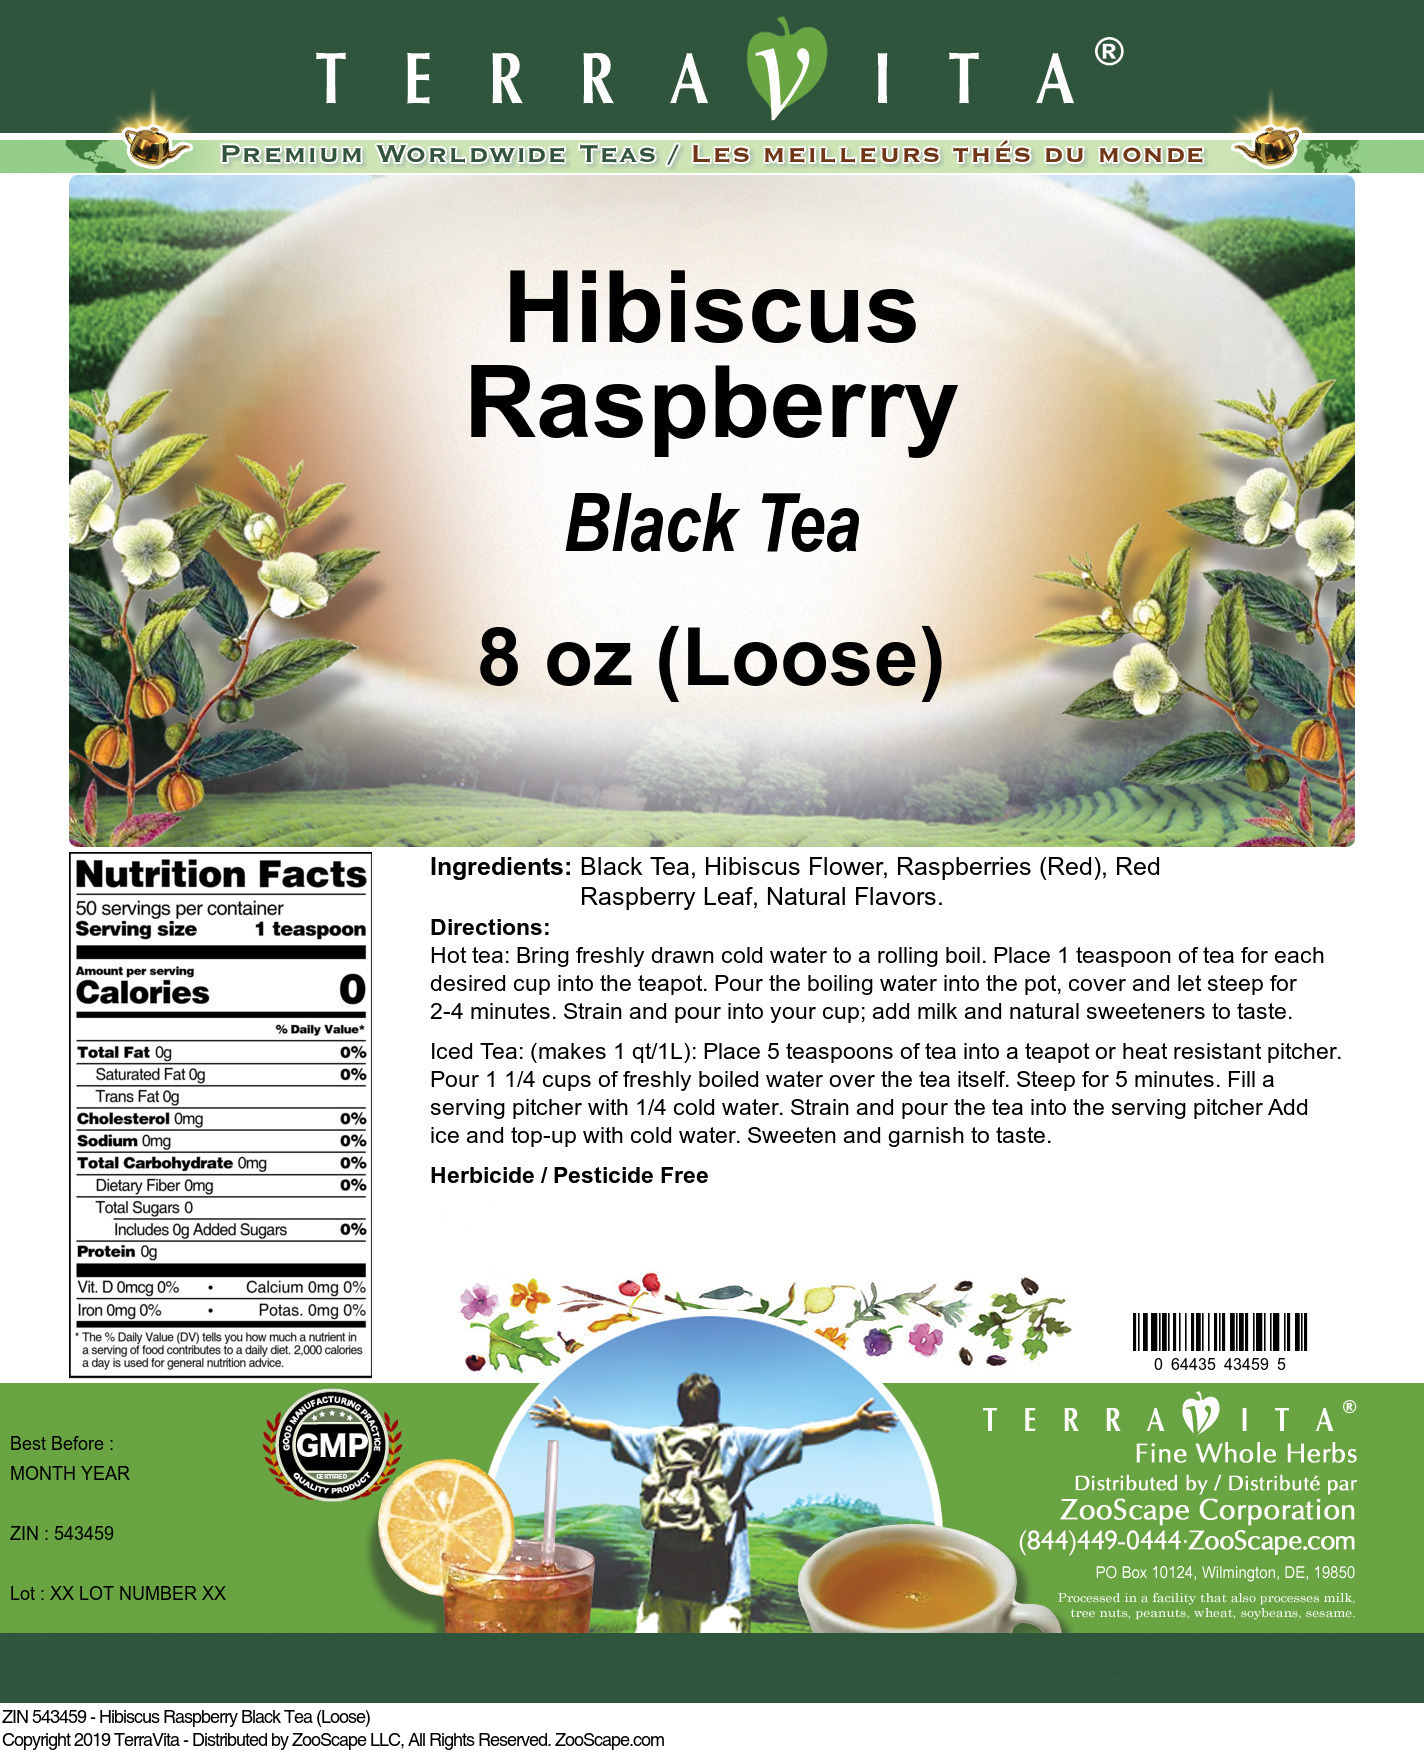 Hibiscus Raspberry Black Tea (Loose) - Label